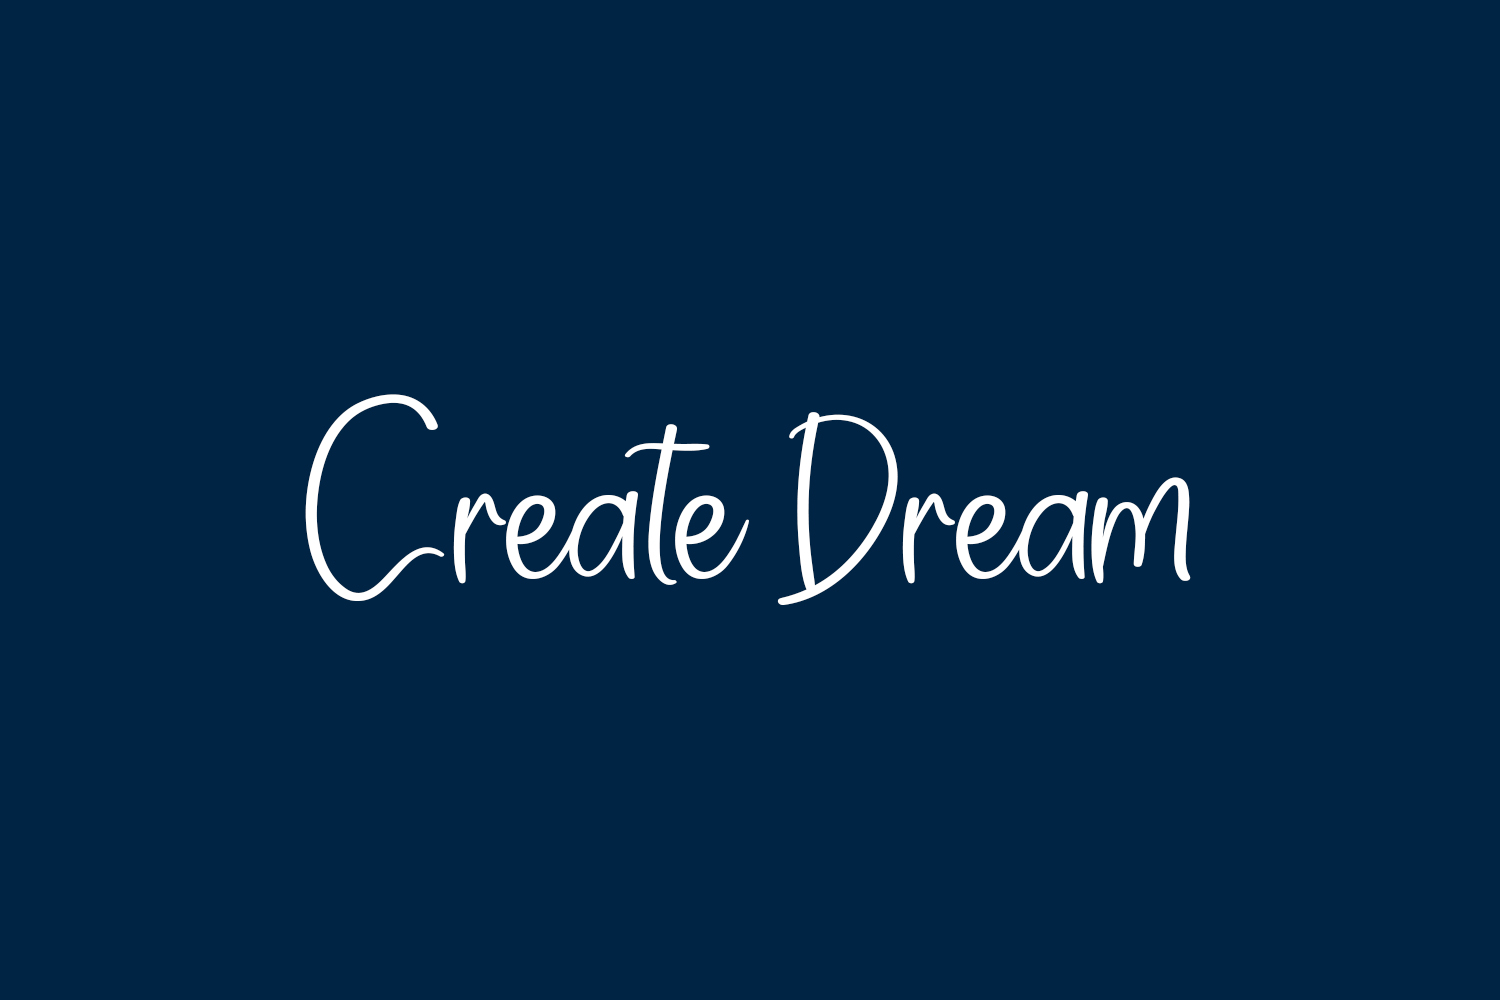 Create Dream Free Font